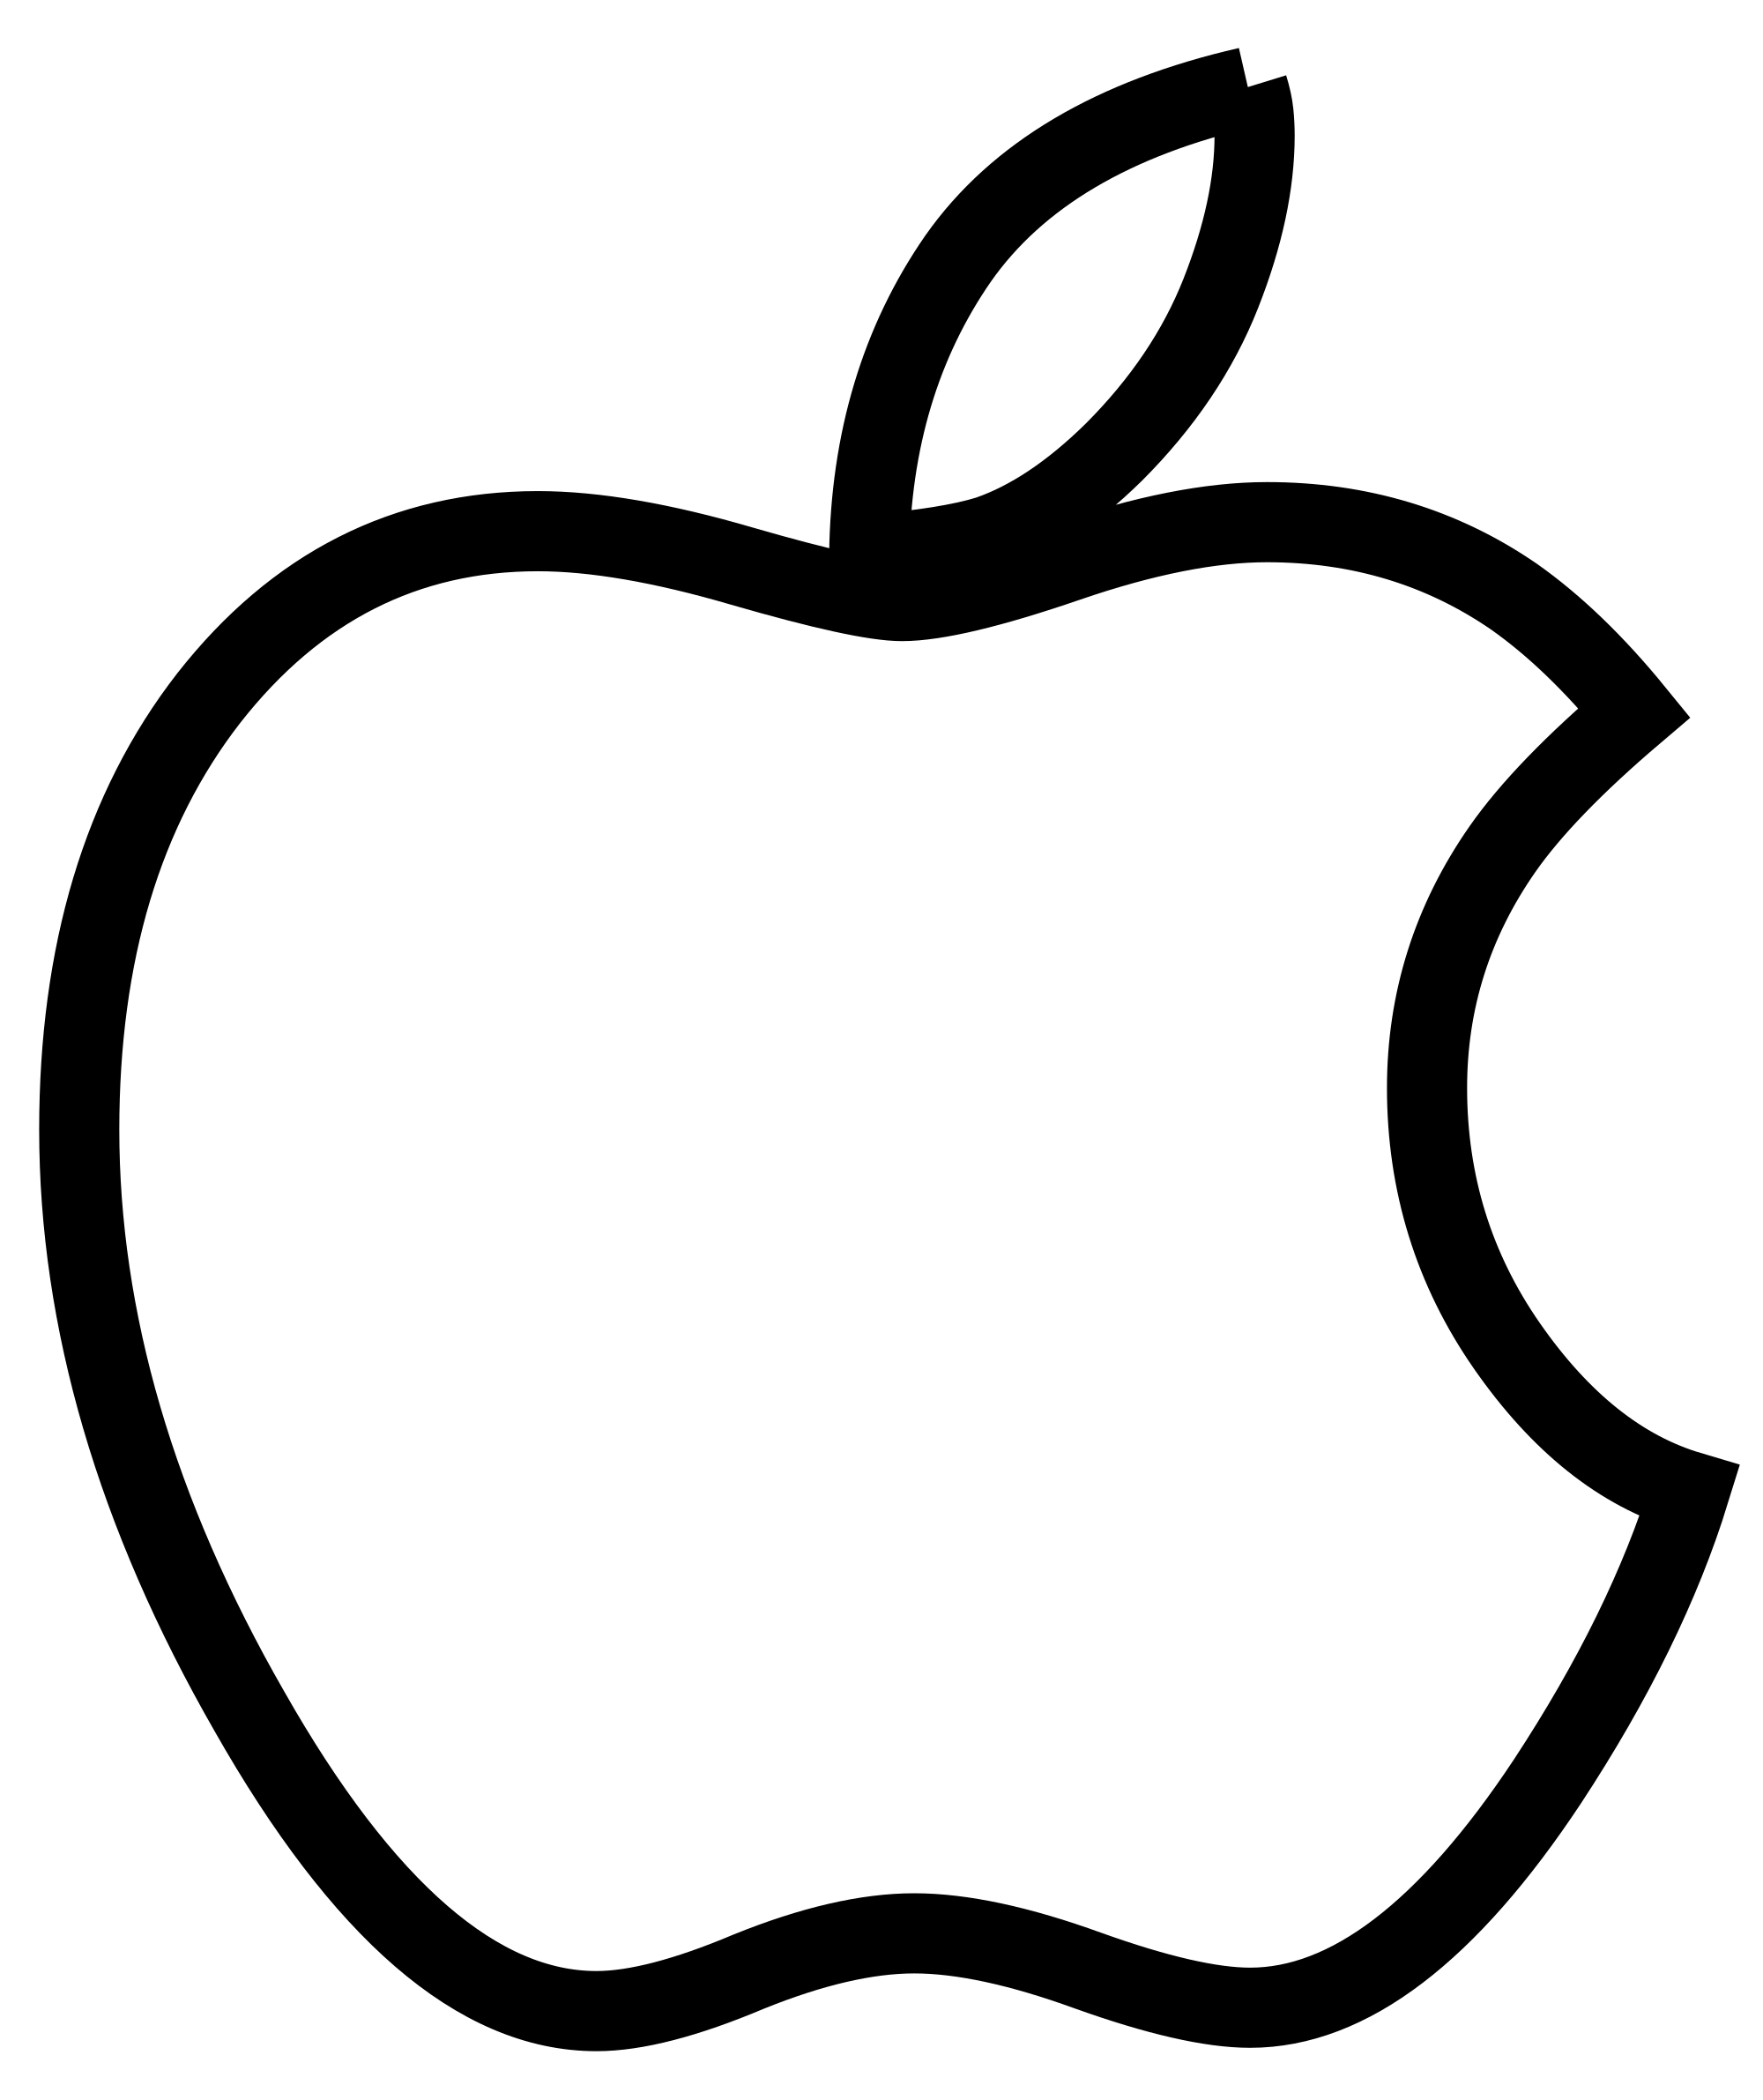 Black and White Apple Logo - Apple inc banner stock black and white